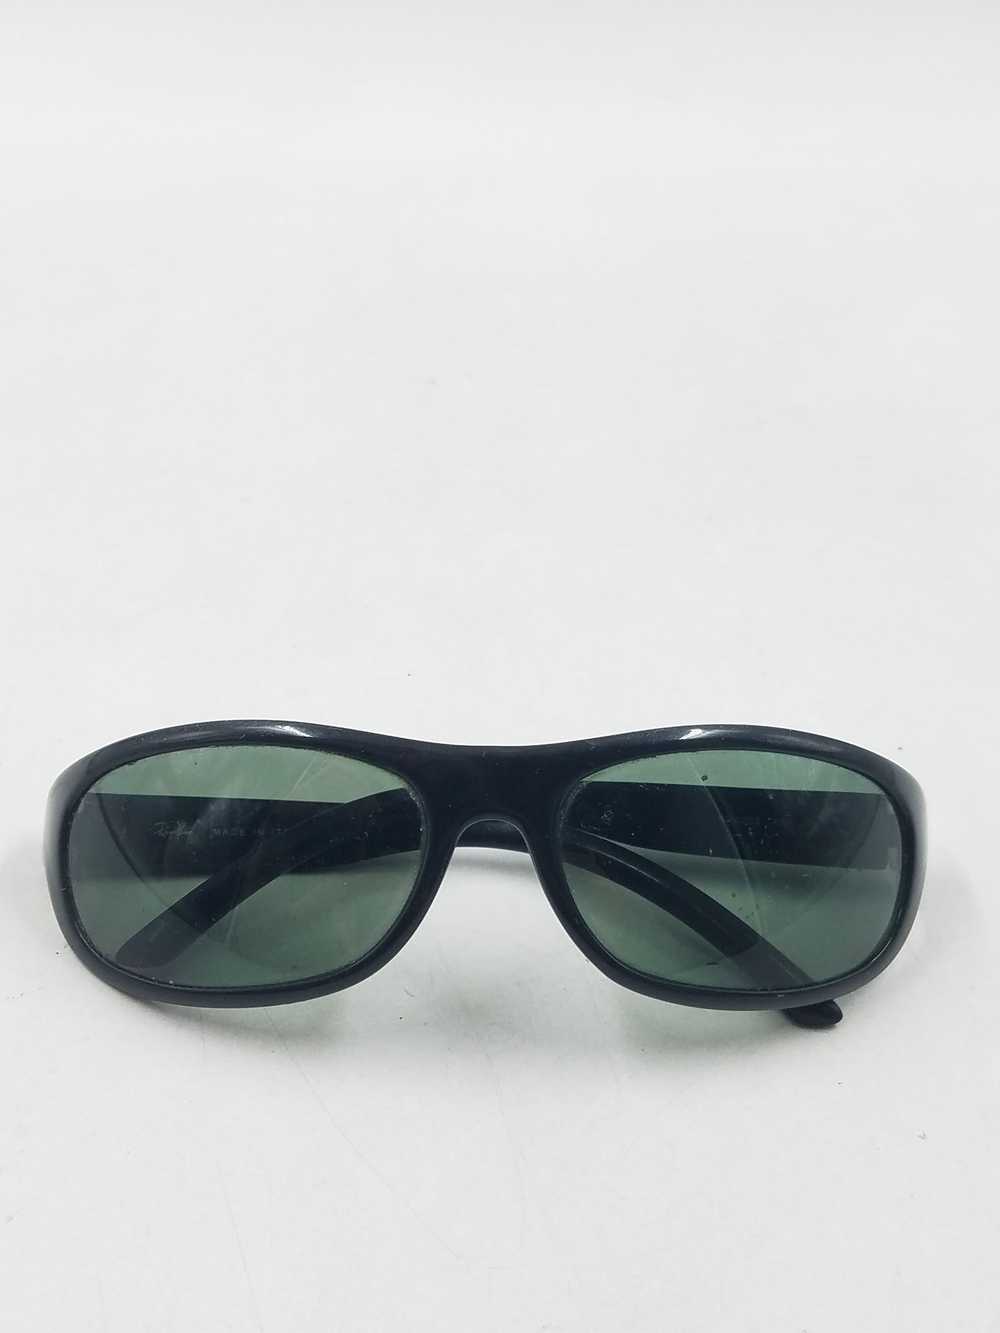 Ray-Ban Black Sport Sunglasses - image 1